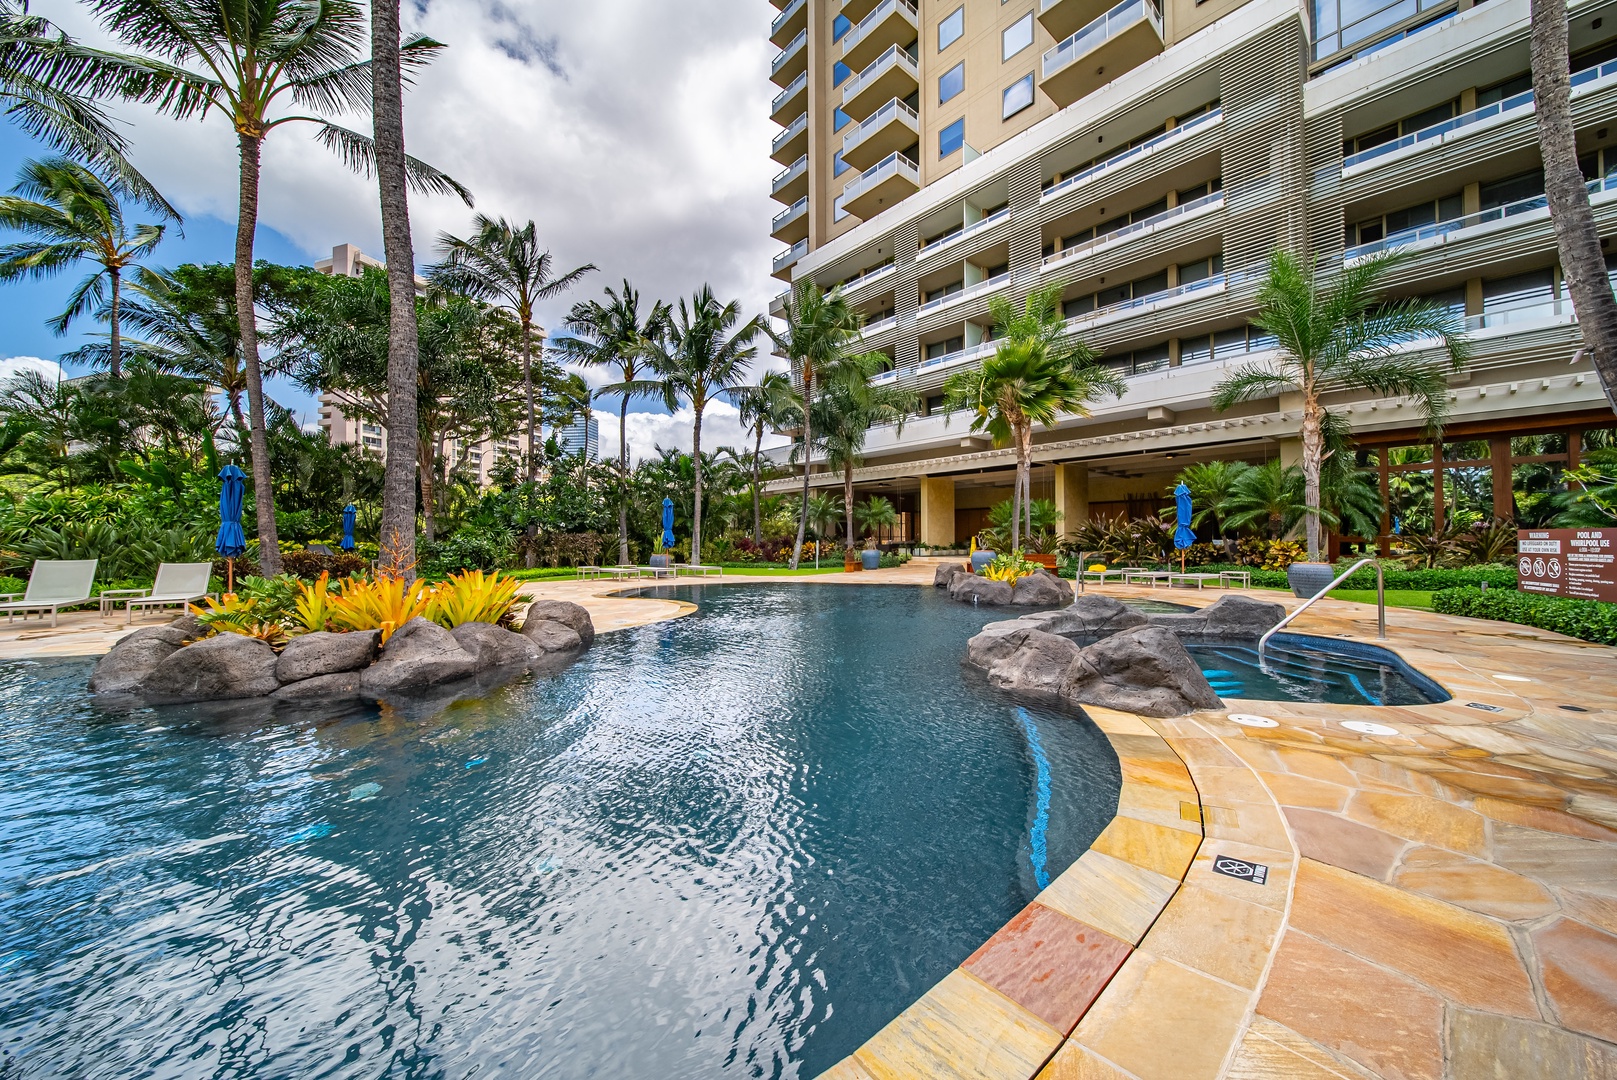 Honolulu Vacation Rentals, Watermark Waikiki Unit 901 - The community shared pool and hot tub.